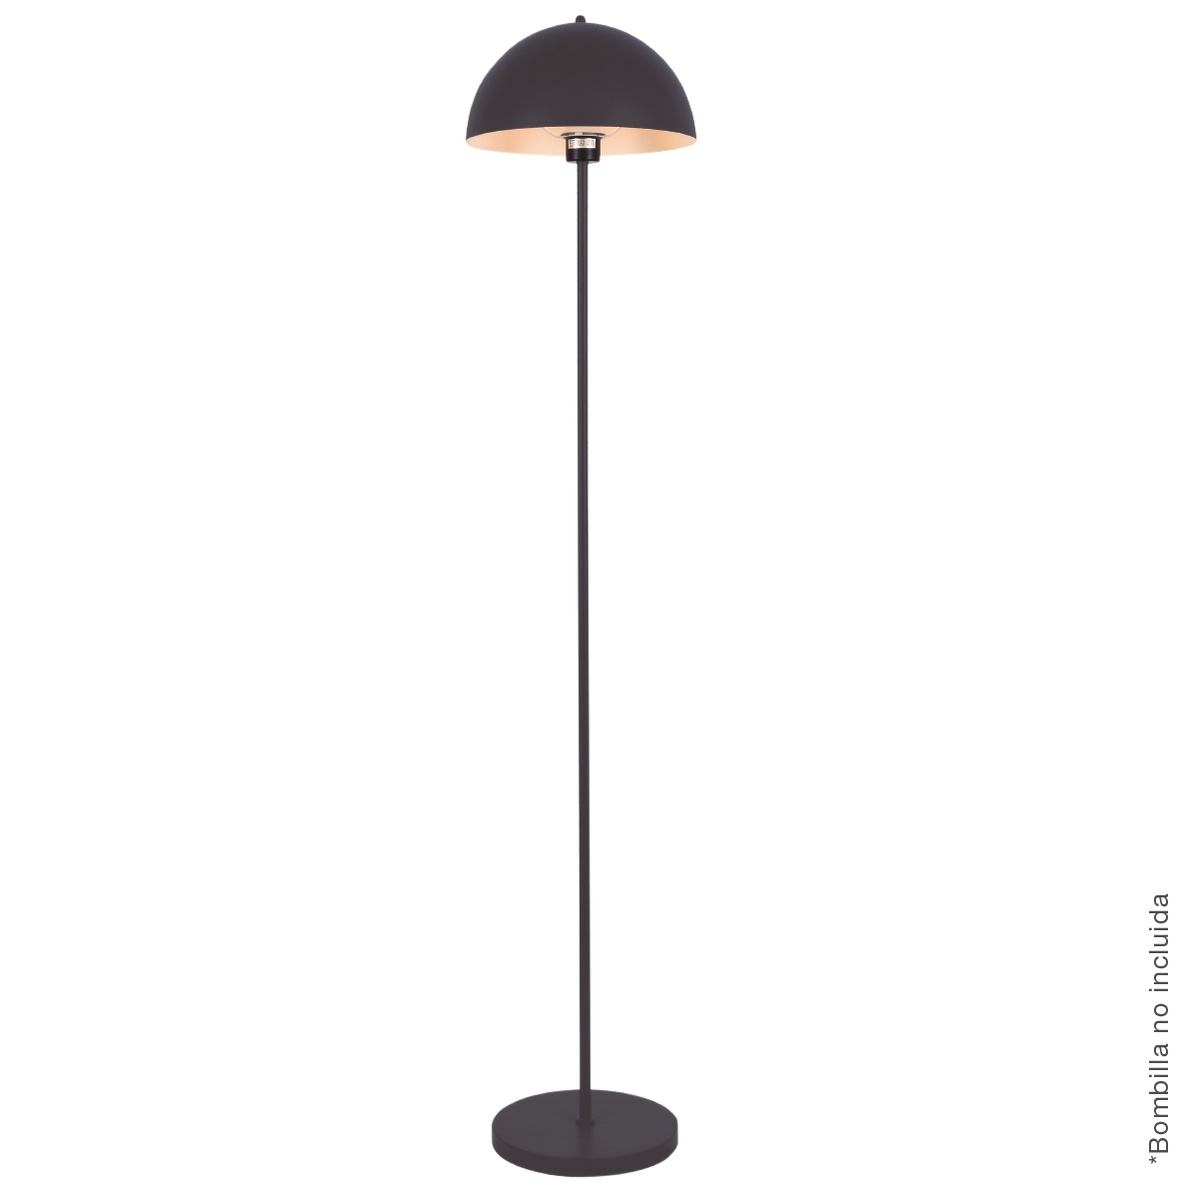 Gohira series floor lamp 1450mm E27 Anthracite grey